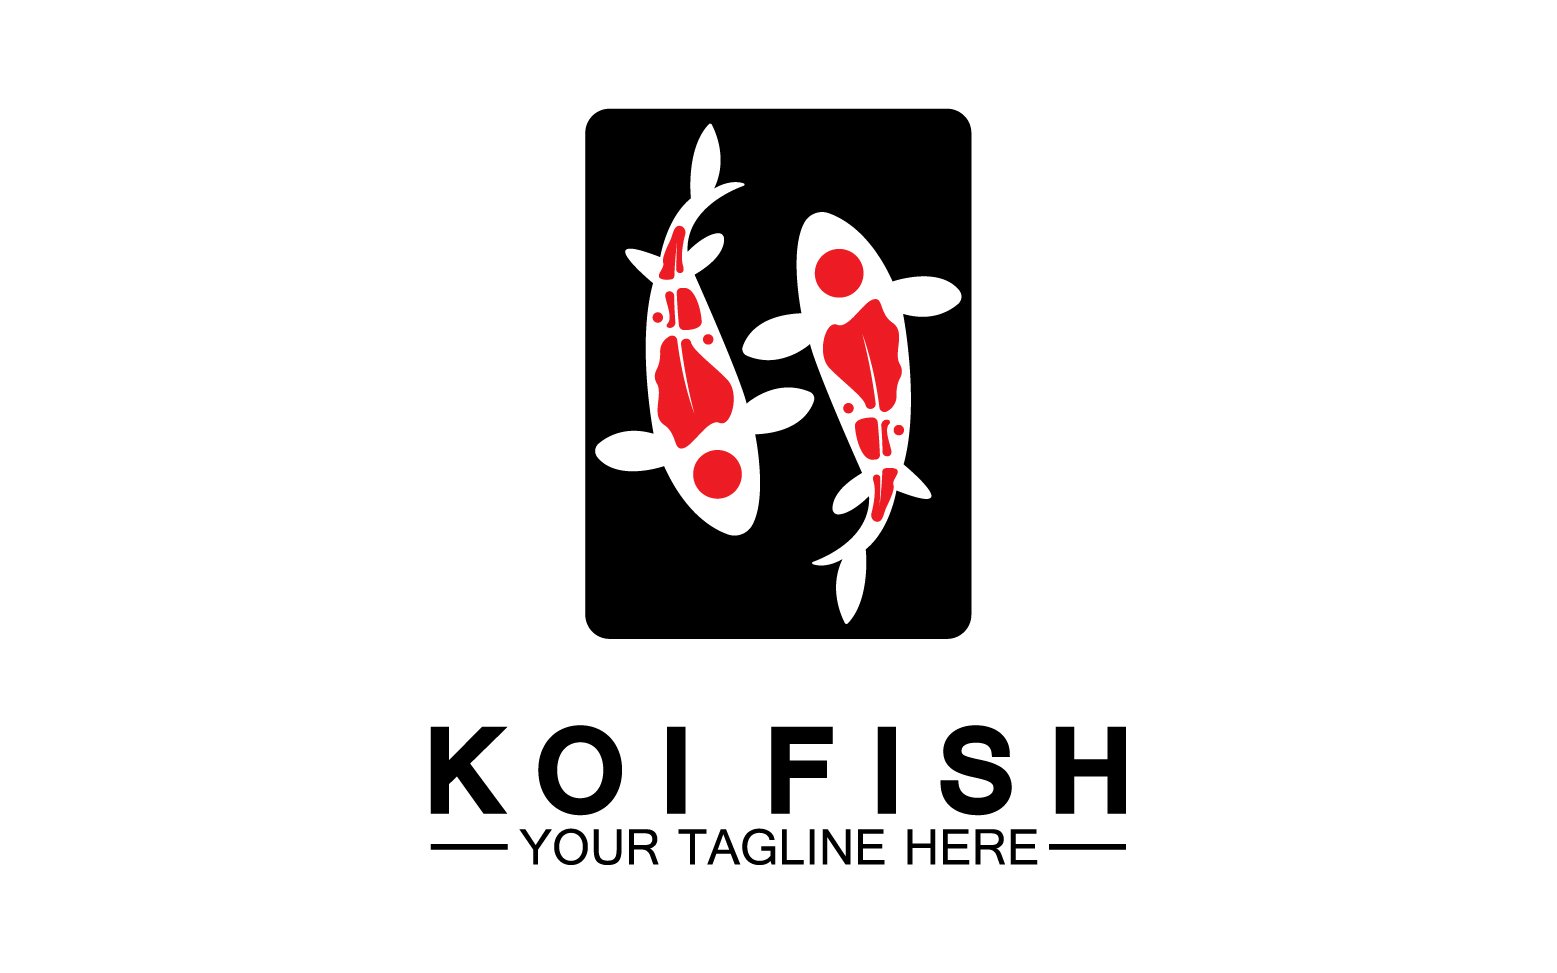 Fish koi black and red icon logo vector v34